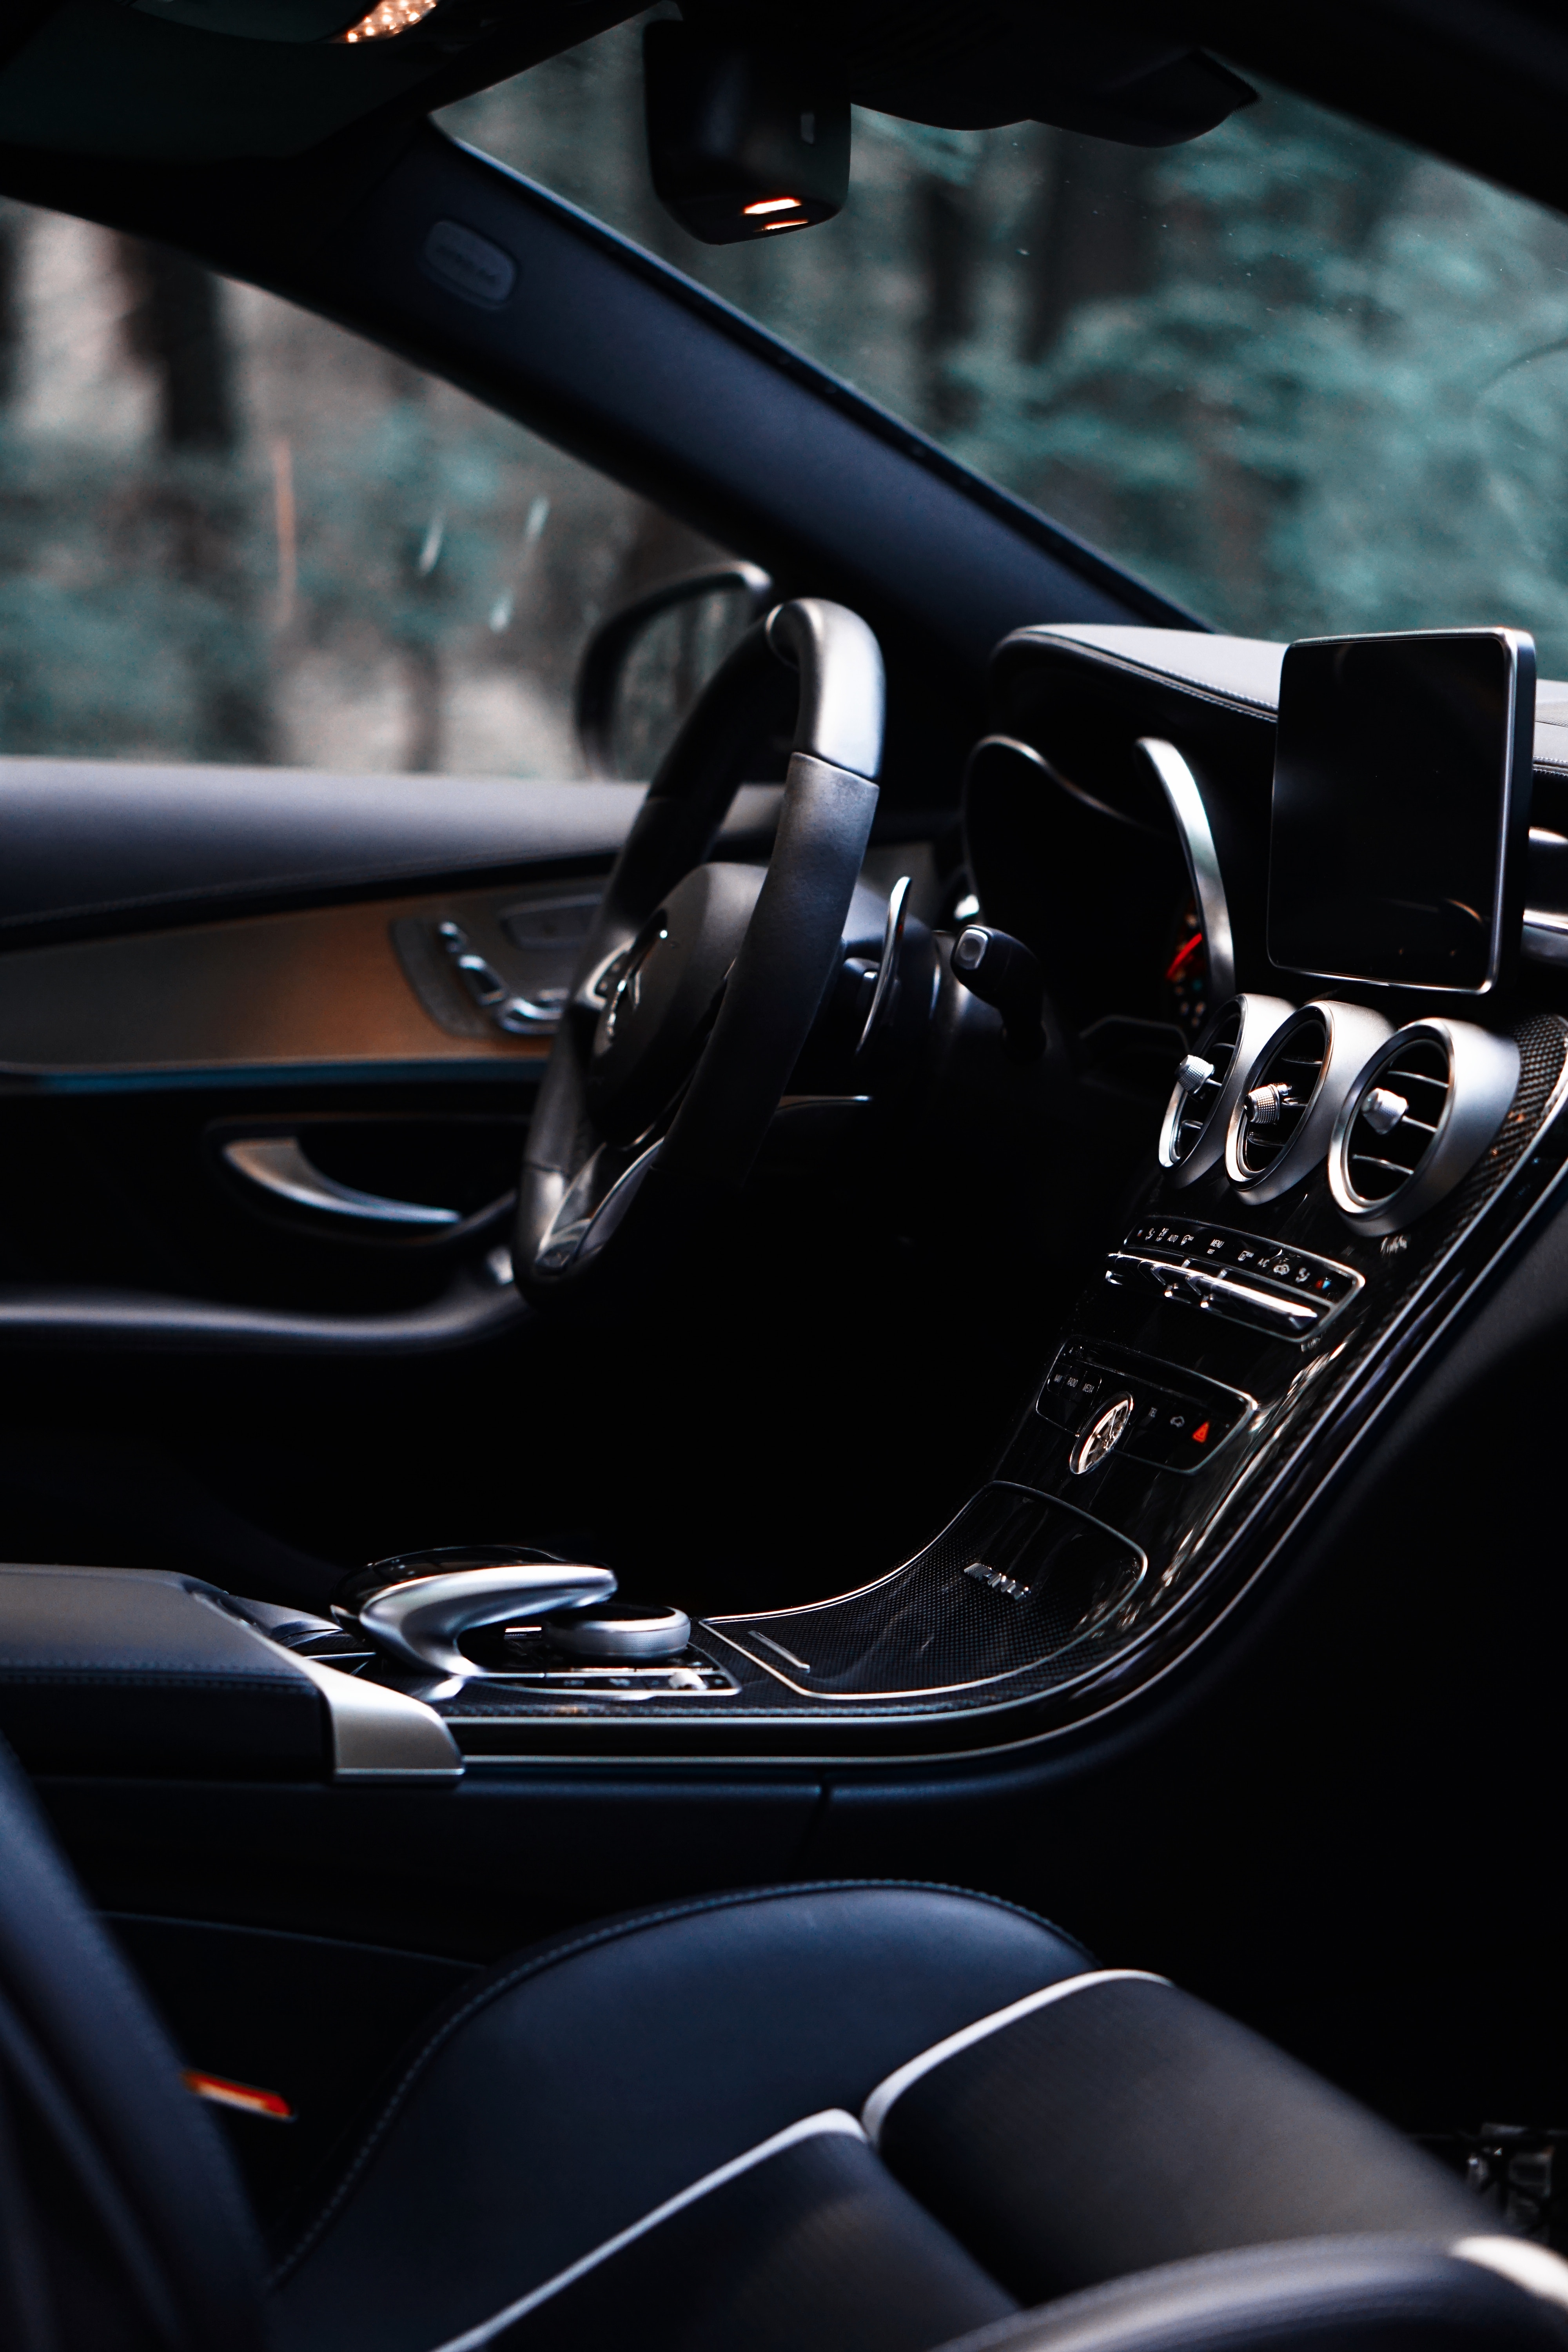 interior, cars, black, car, machine, steering wheel, control panel, rudder, salon